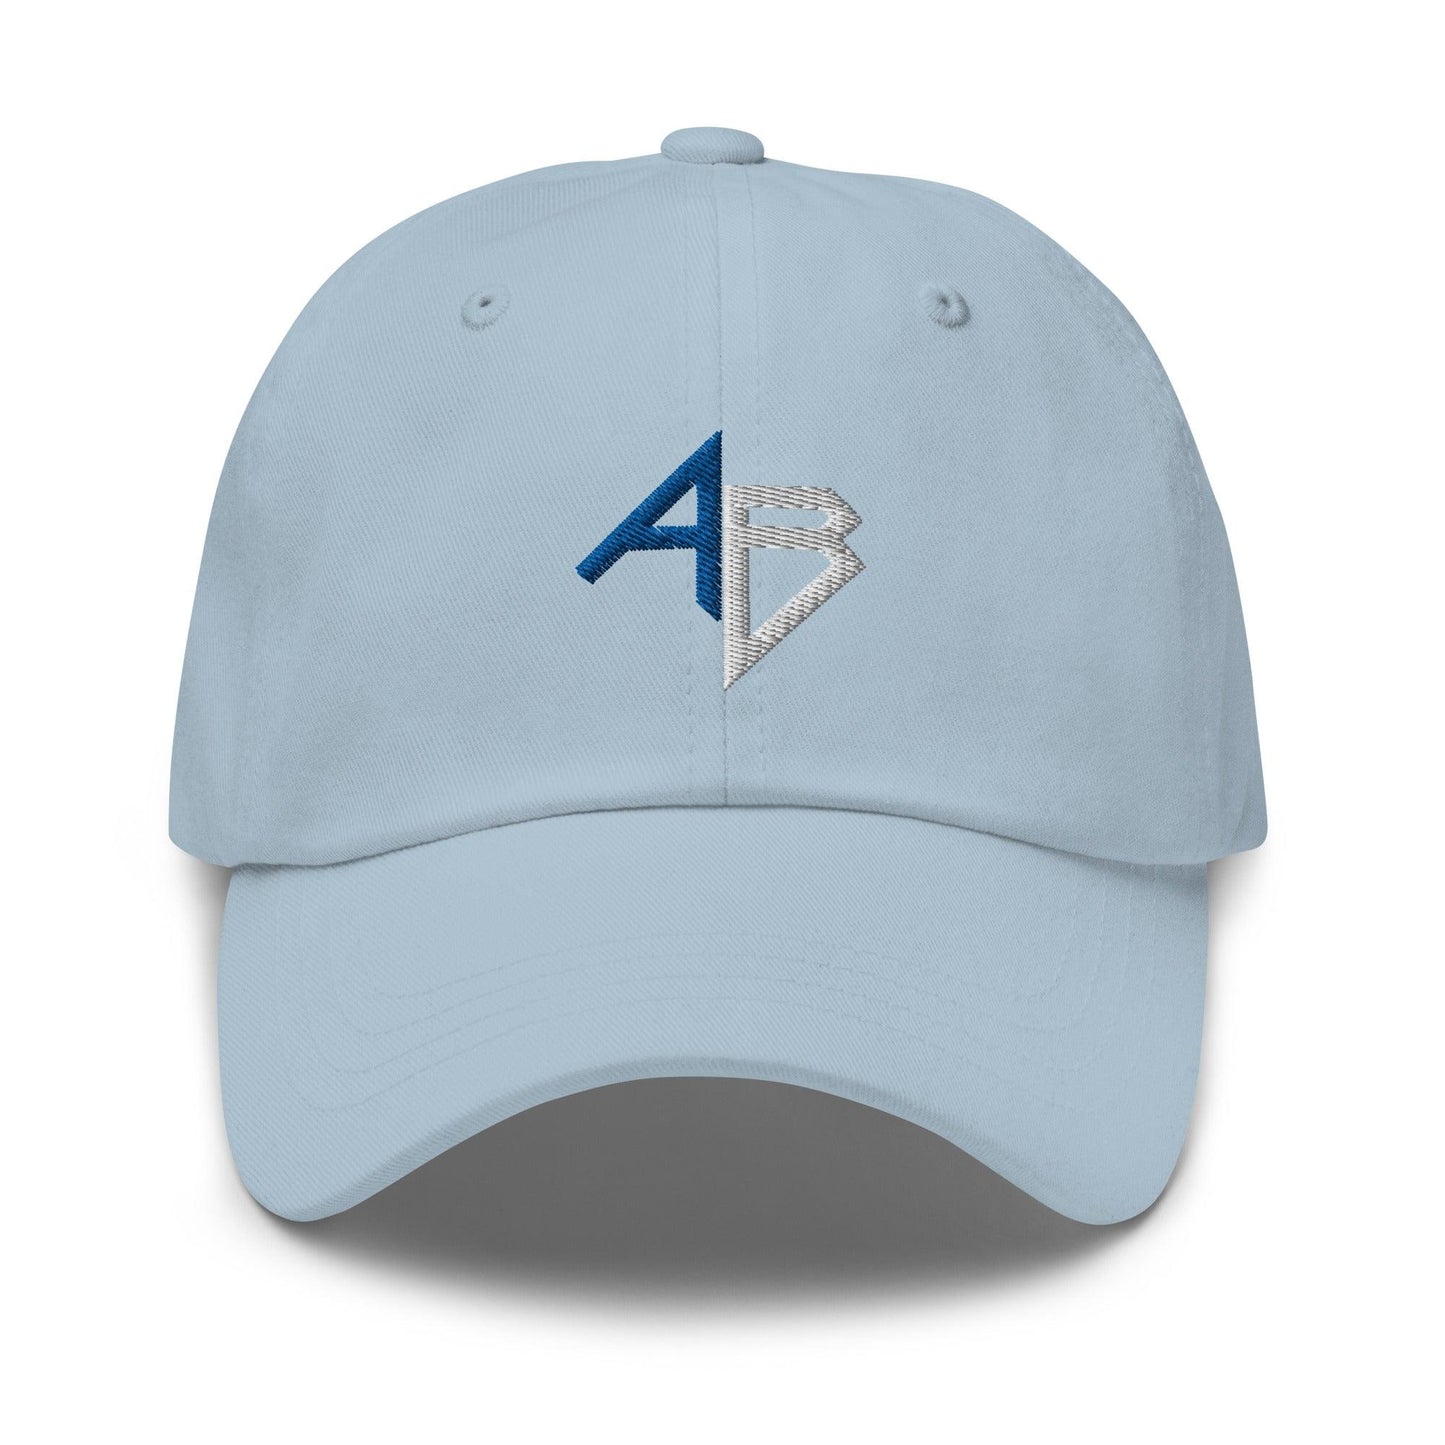 Adam Boucher “AB” hat - Fan Arch